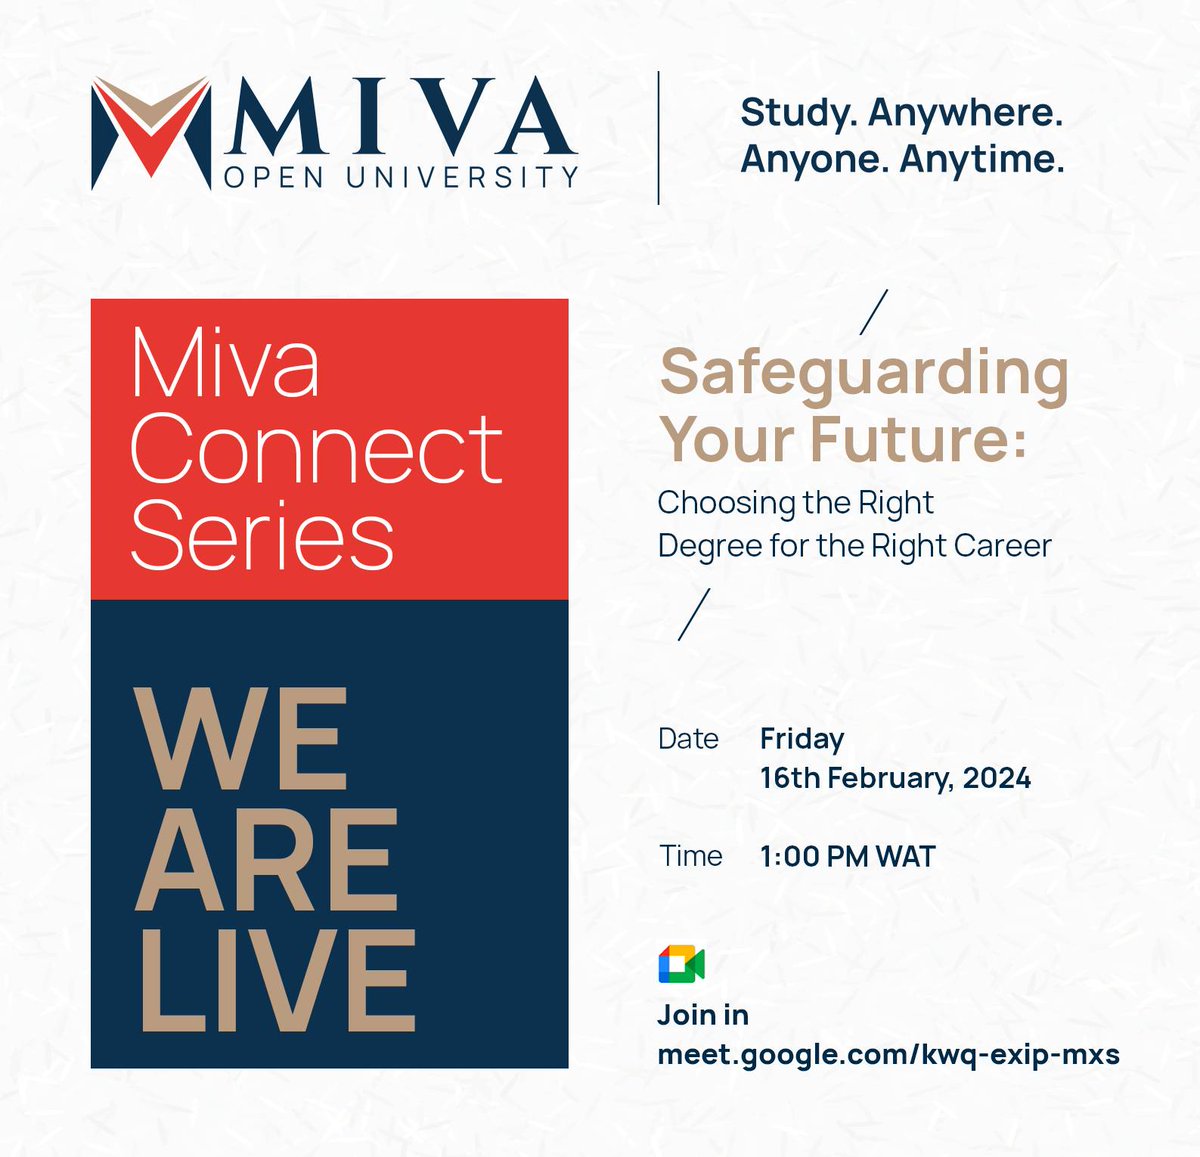 We are LIVE!!! 🎯

Use this link to join us: ⏬ meet.google.com/kwq-exip-mxs

#MivaOpenUniversity #MivaConnectSeries #StudyatMiva #GetMivaGetMoving #MivaCommunity